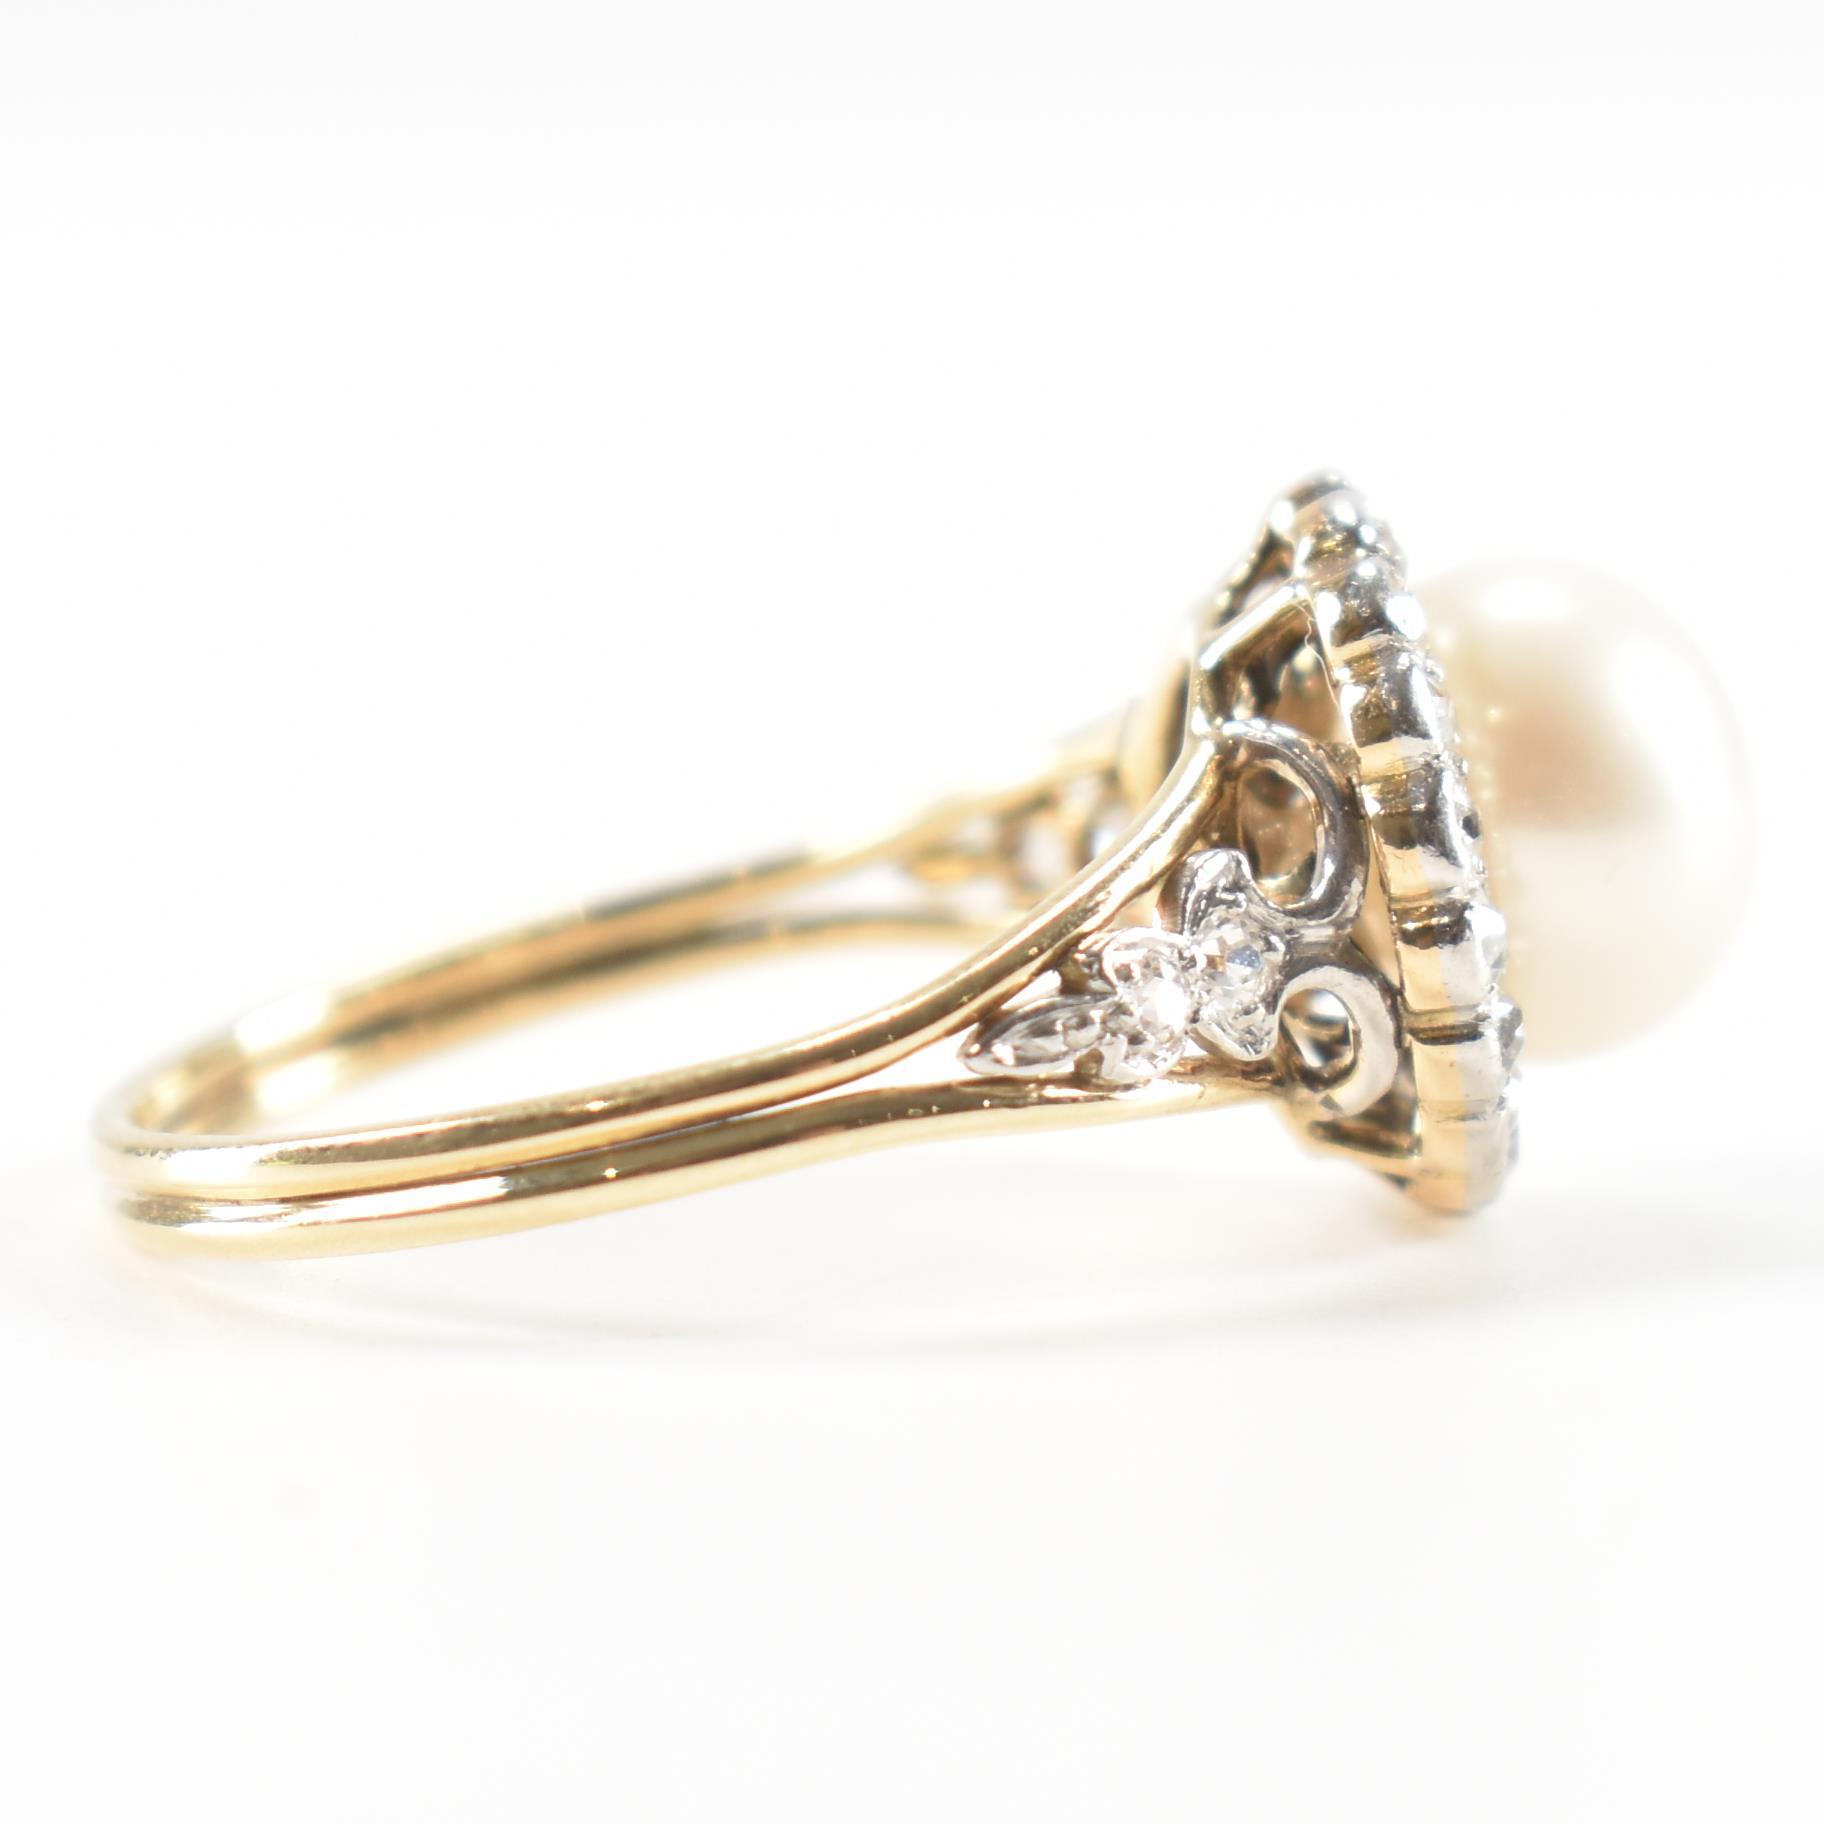 GOLD PEARL & DIAMOND HALO DRESS RING - Image 5 of 6